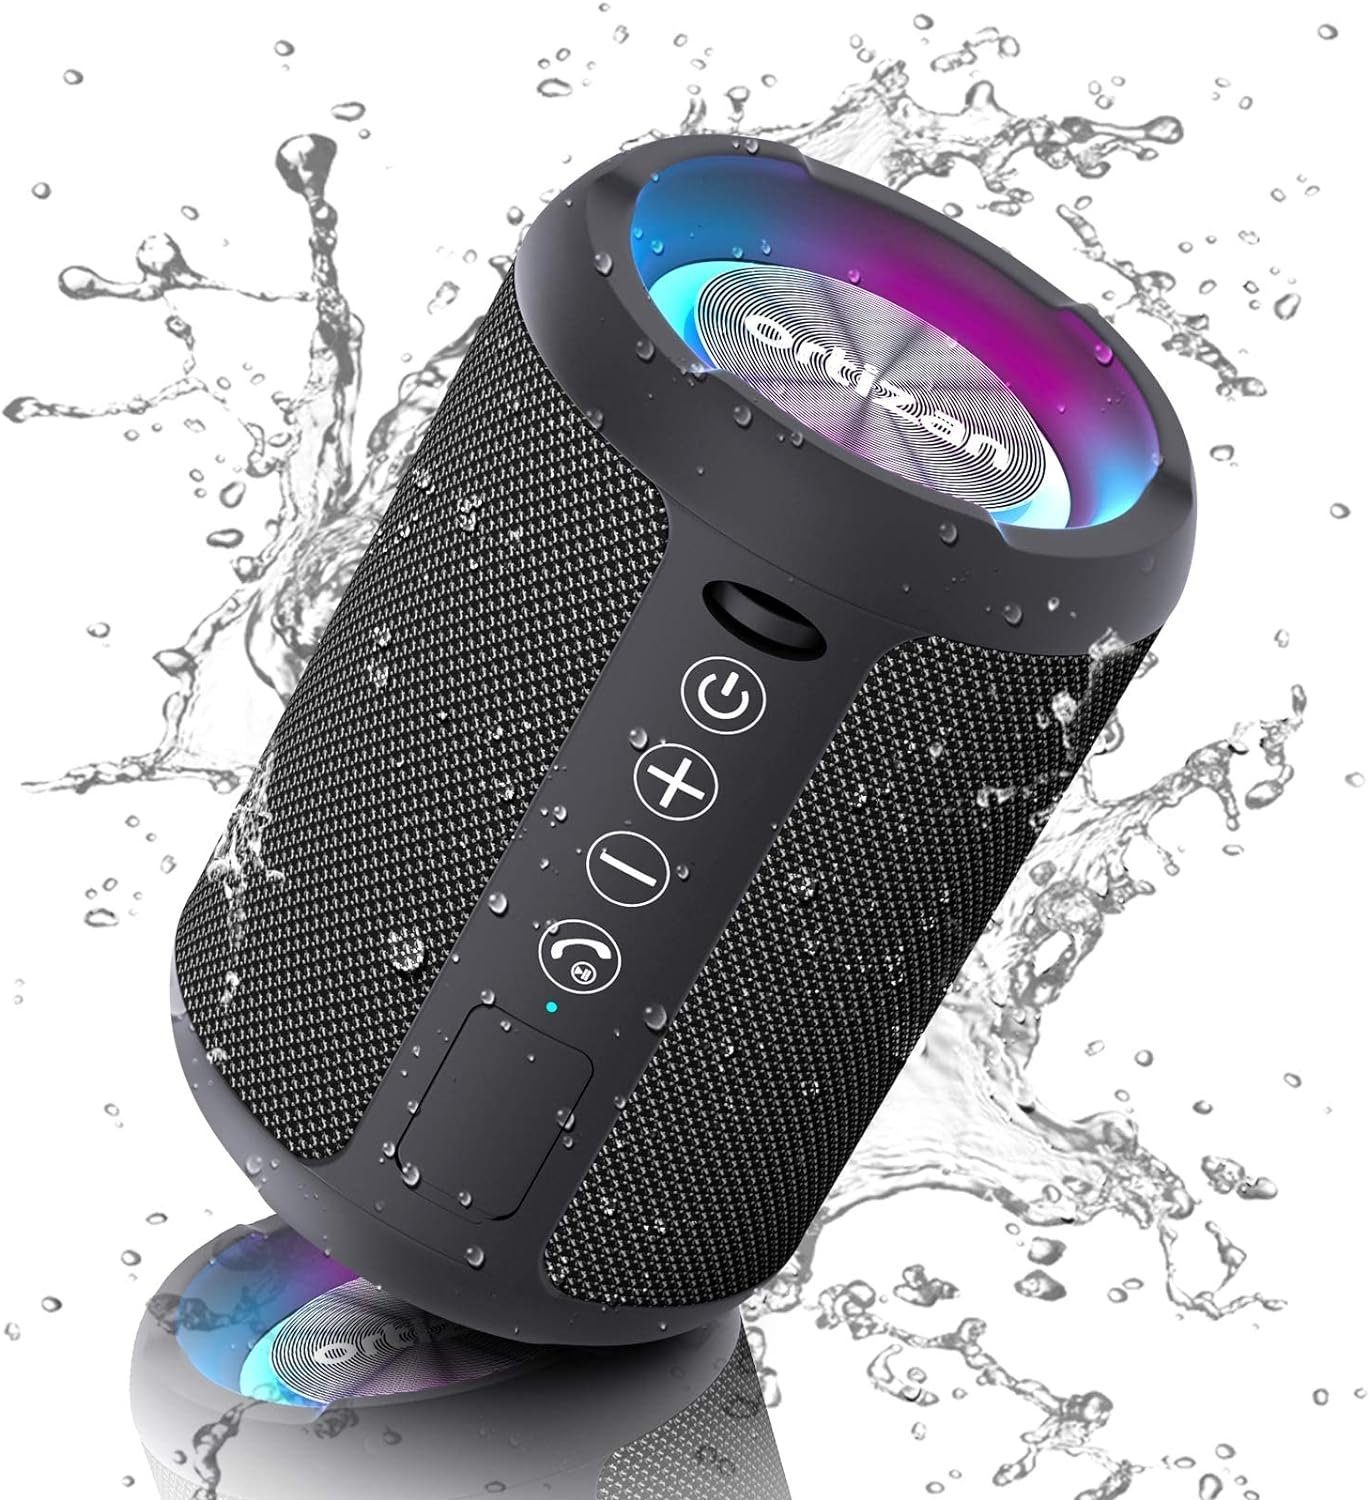 Ortizan Stereo Lautsprecher (Bluetooth, 10 W, mit LED Licht - Tragbarer Lautsprecher Bluetooth Boxen Enormer Bass)